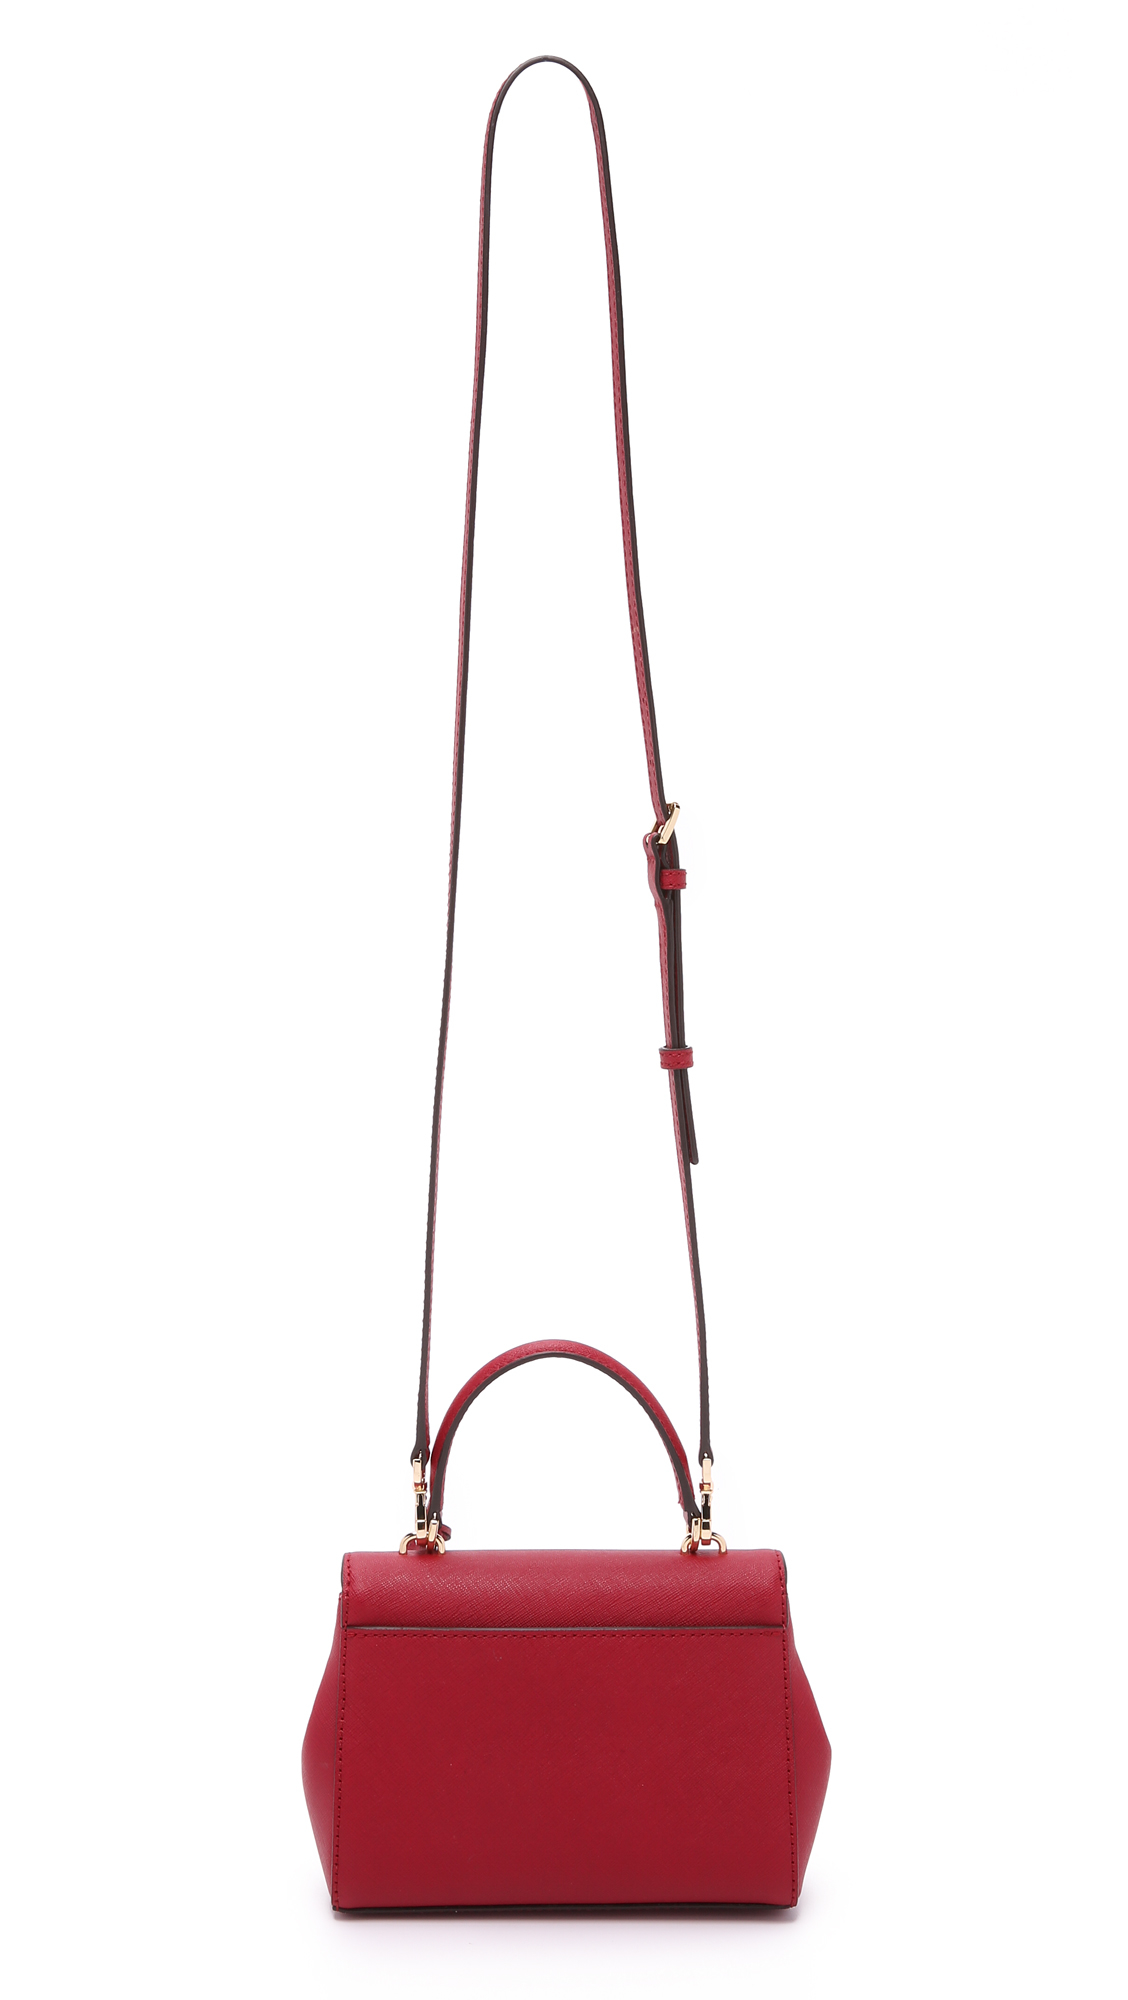 NWT Michael Kors Ava Extra Small Saffiano Leather Crossbody Bag Sangria Red